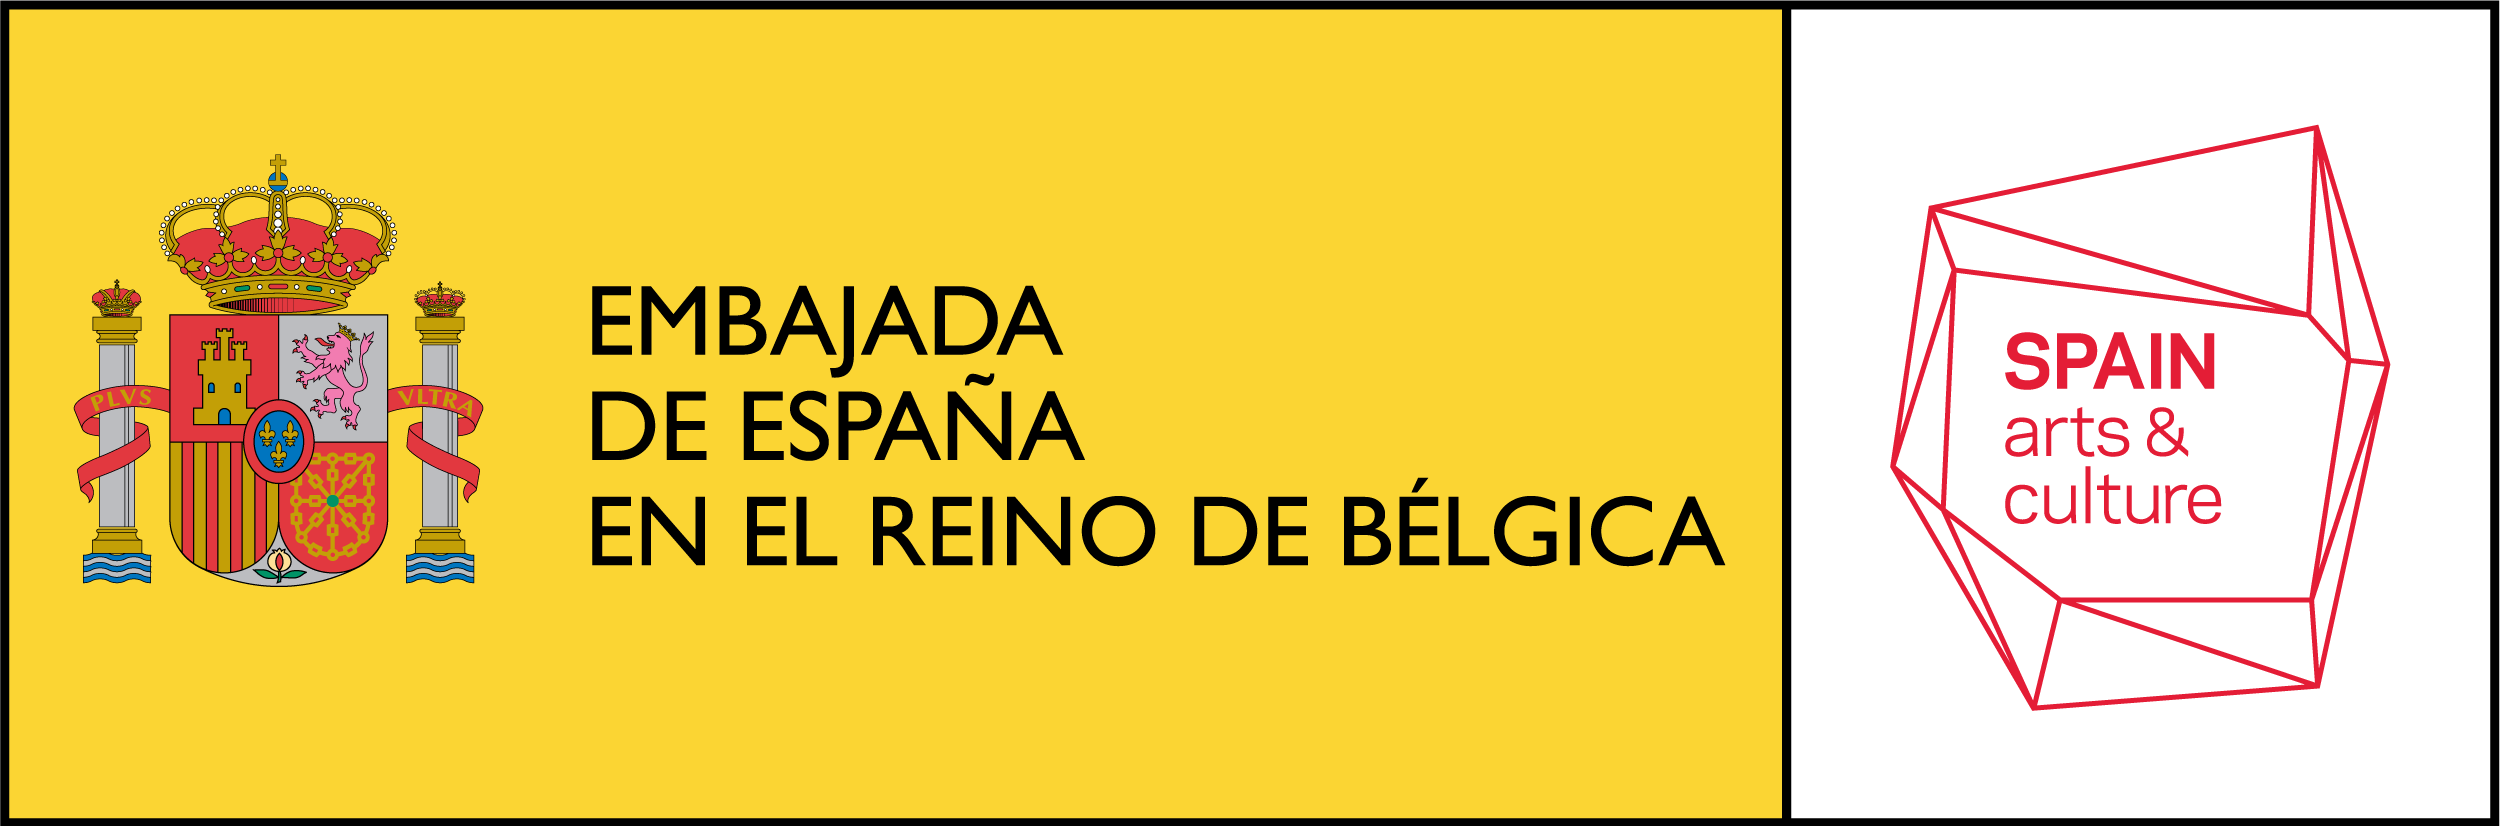 Embajada-espana-belgica